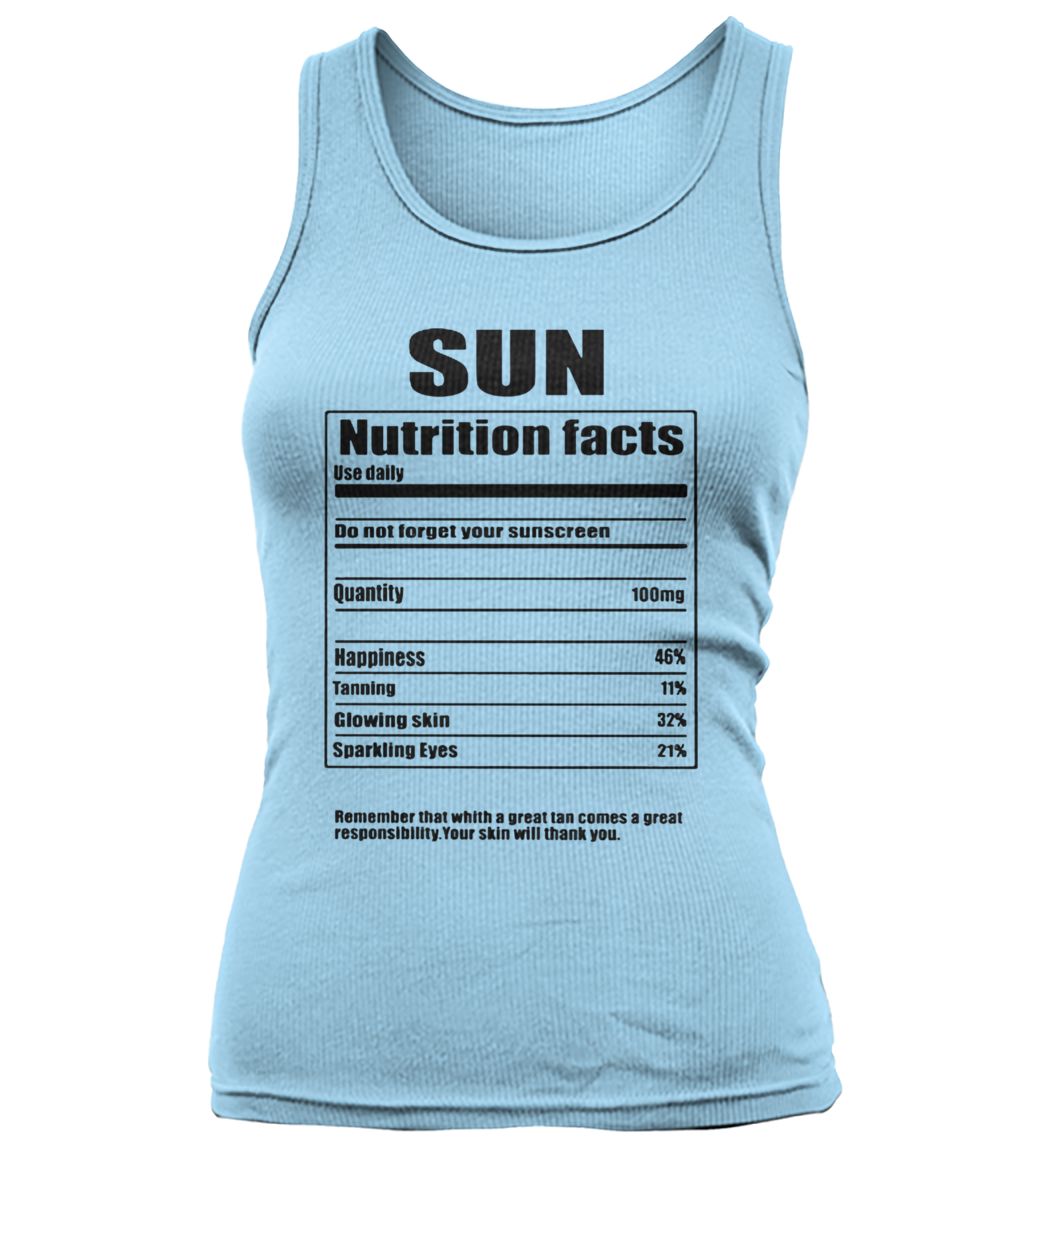 Sun nutrition facts label women's tank top